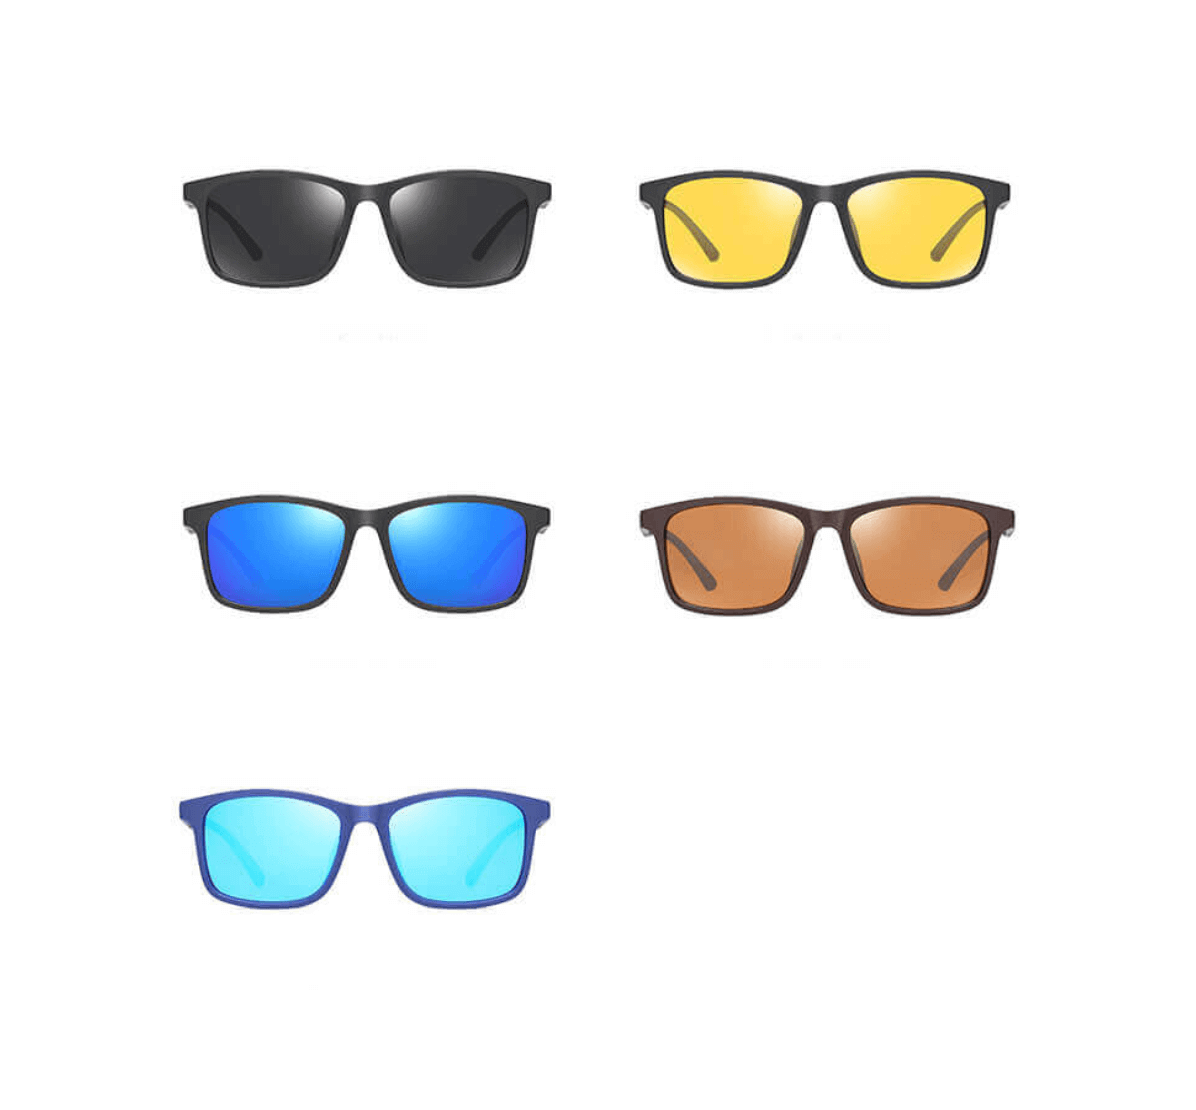 custom plastic sunglasses, custom sunglasses, plastic sunglasses in bulk, plastic sunglasses manufacturers, custom sunglasses manufacturers, sunglasses supplier